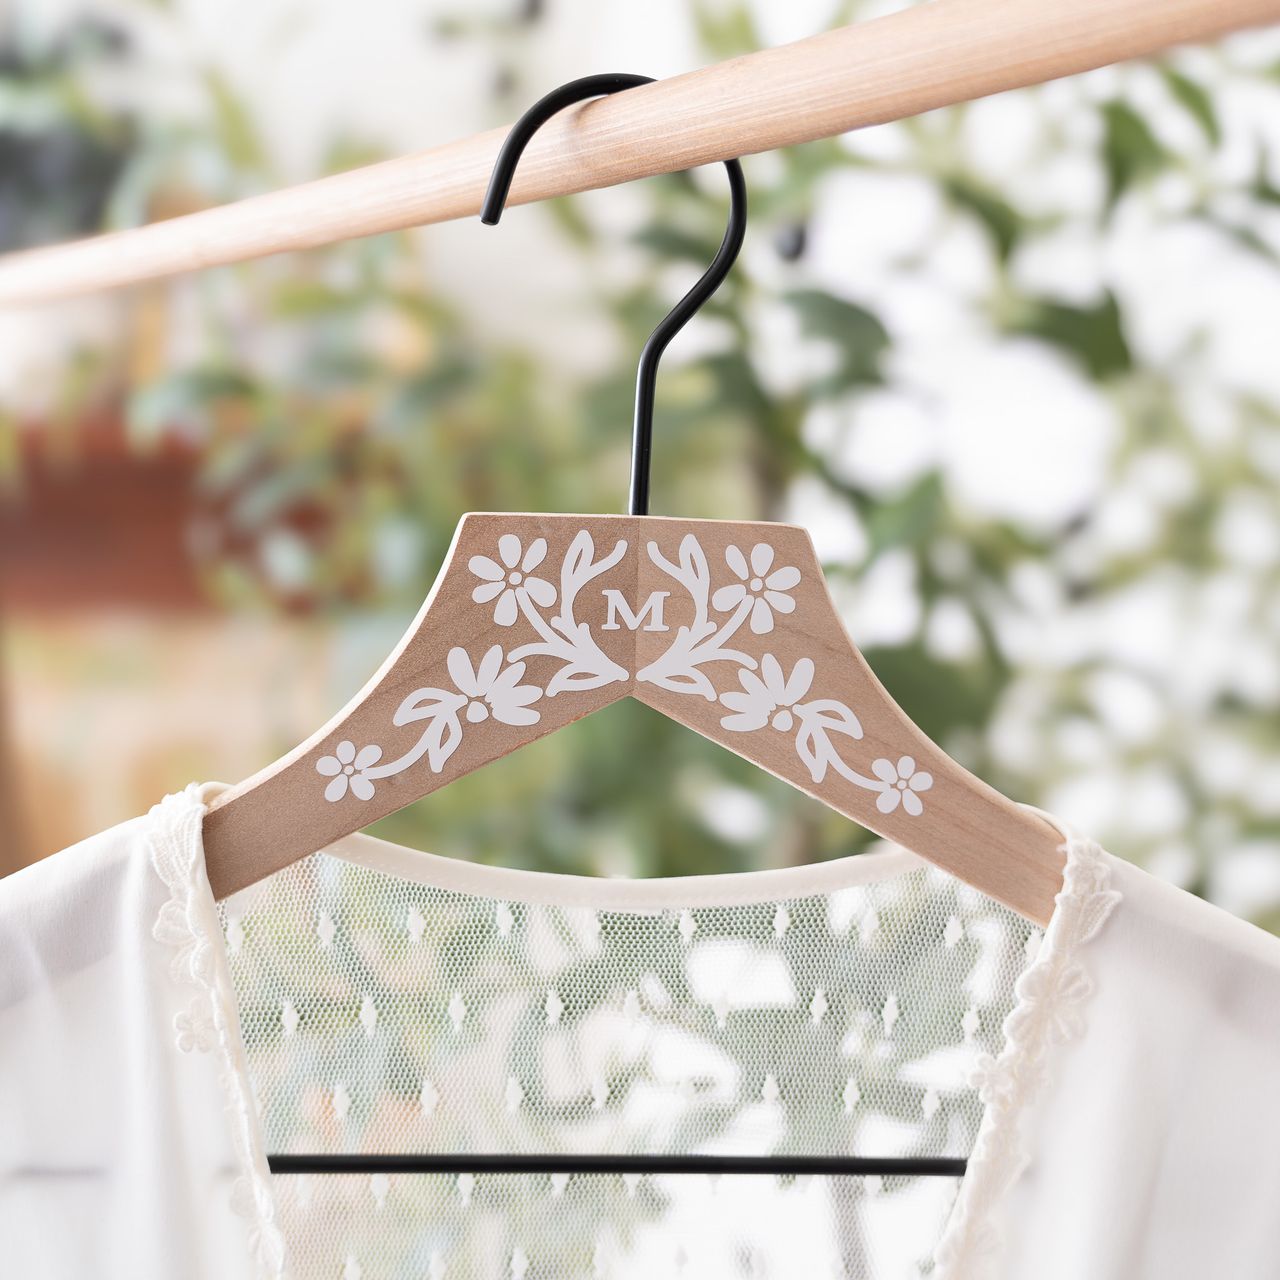 Personalized wedding hanger